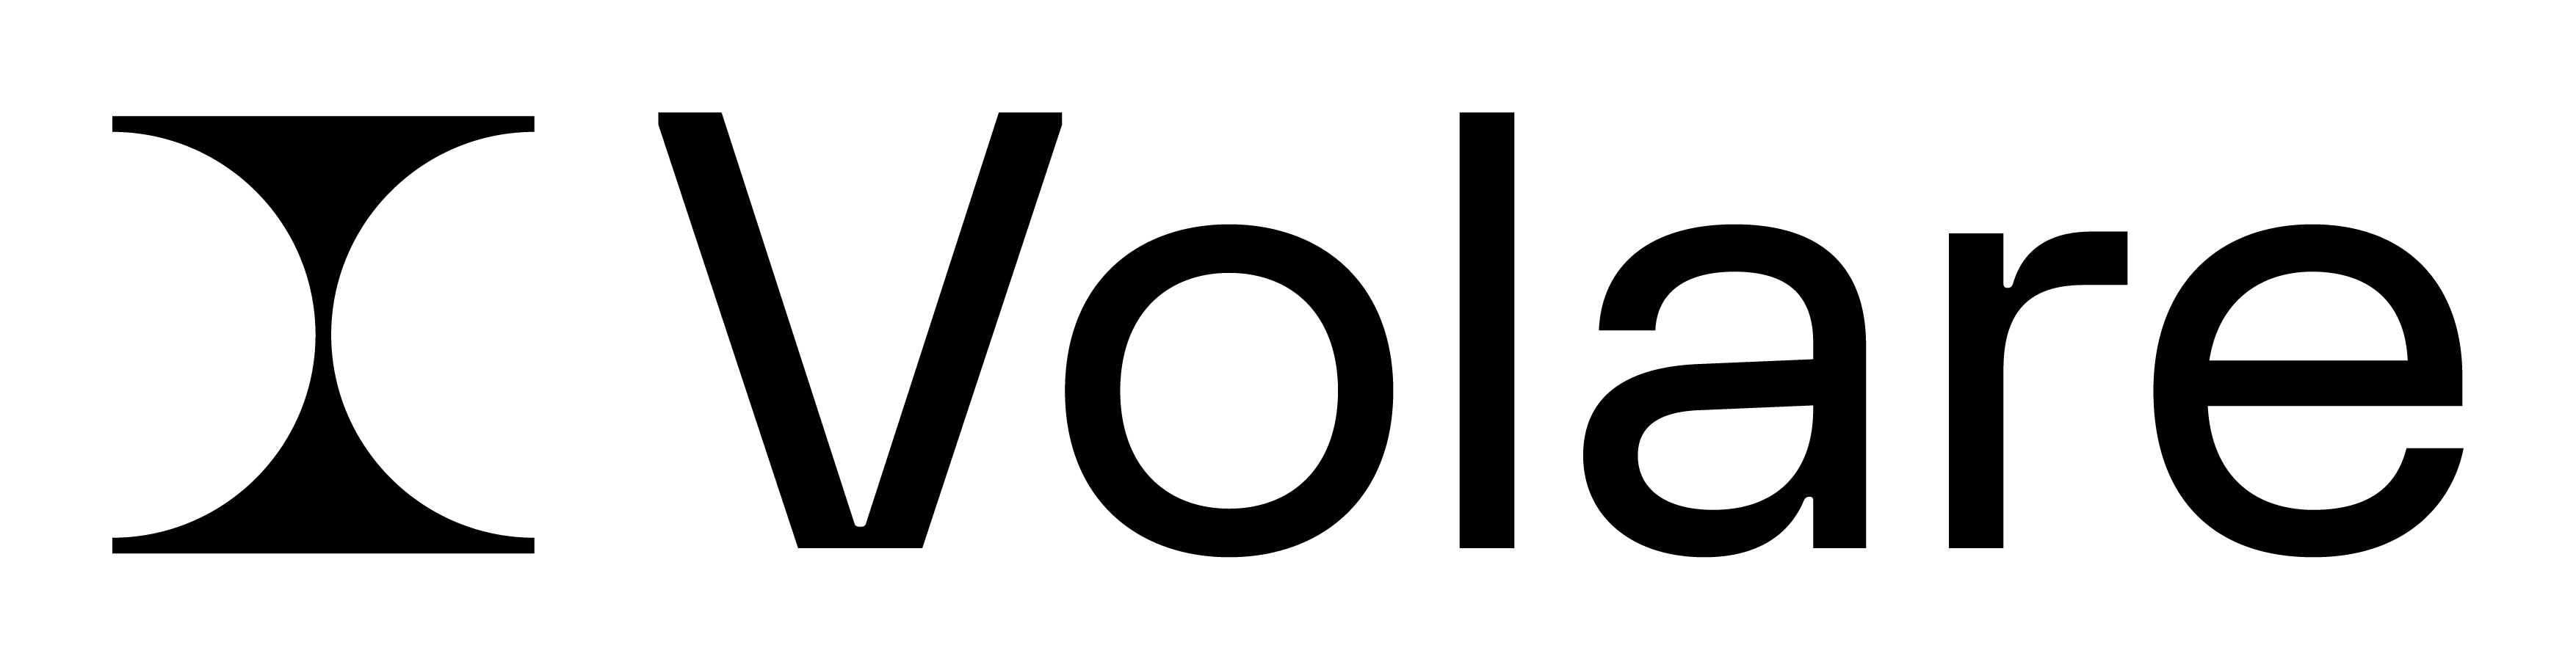 Black text logo on a transparent background